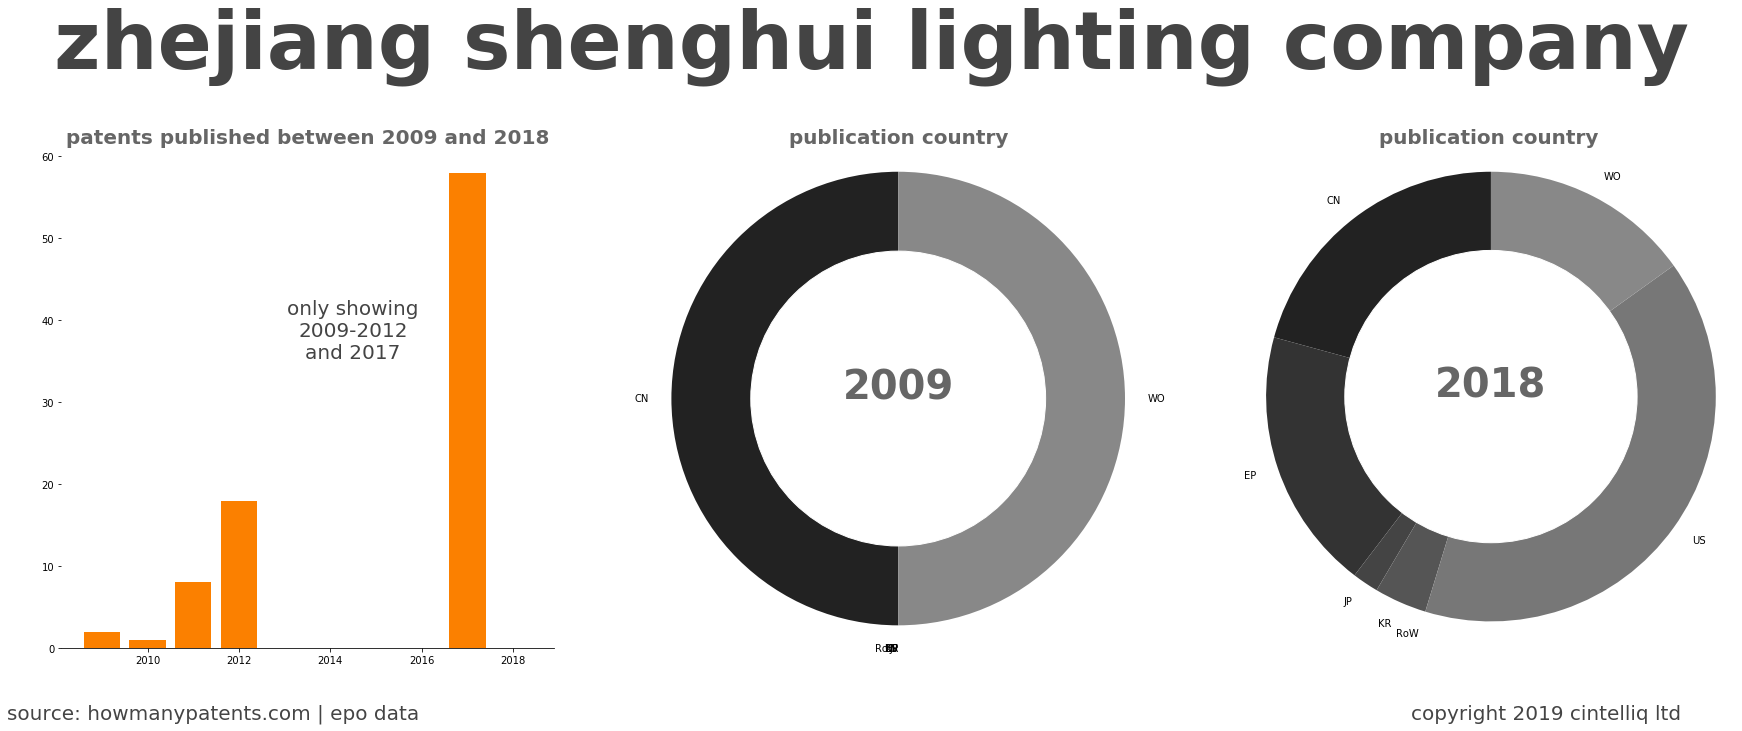 summary of patents for Zhejiang Shenghui Lighting Company